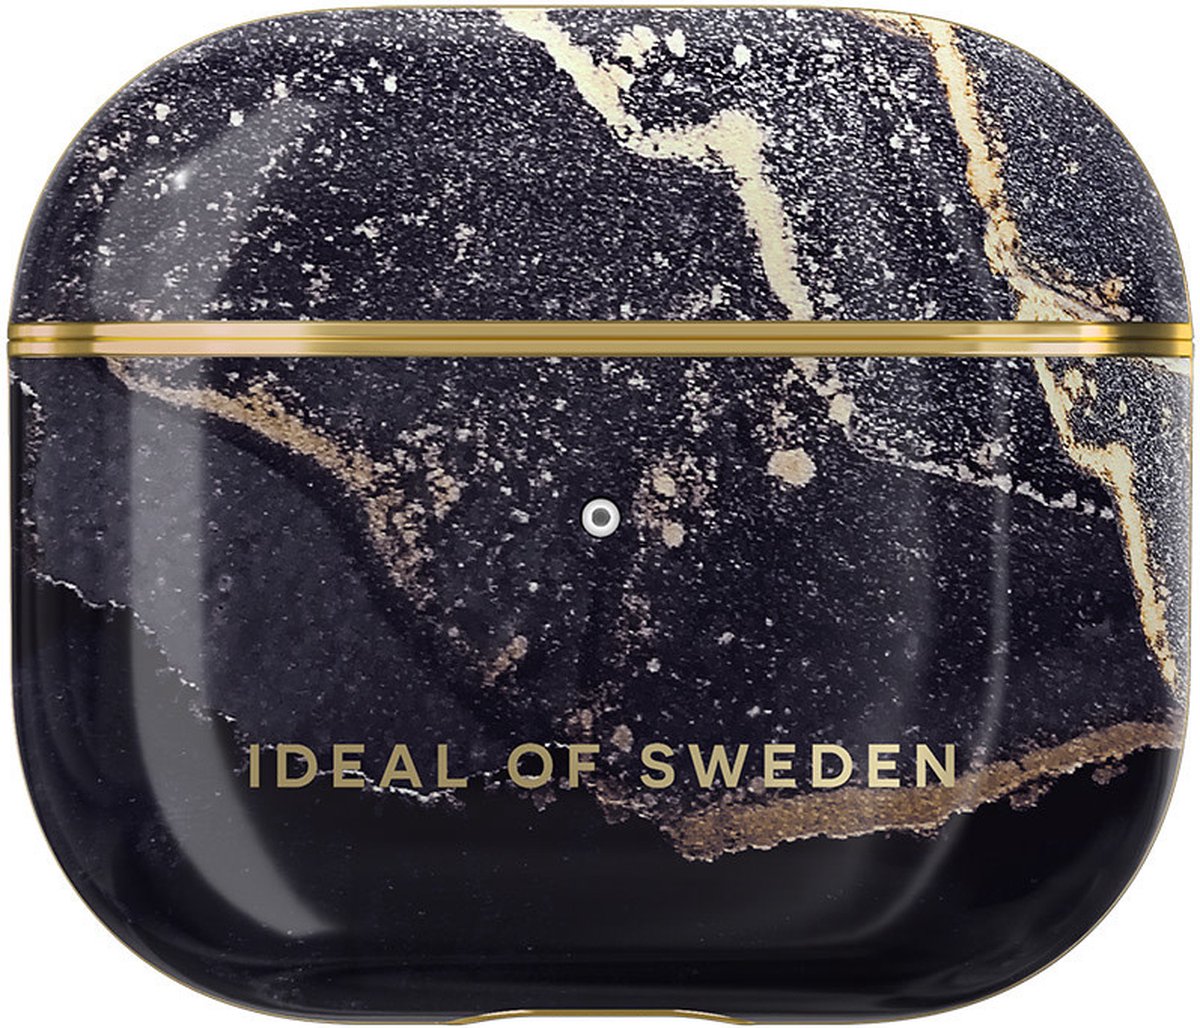 iDeal of Sweden AirPods 3 hoesje - Golden Twilight Marble